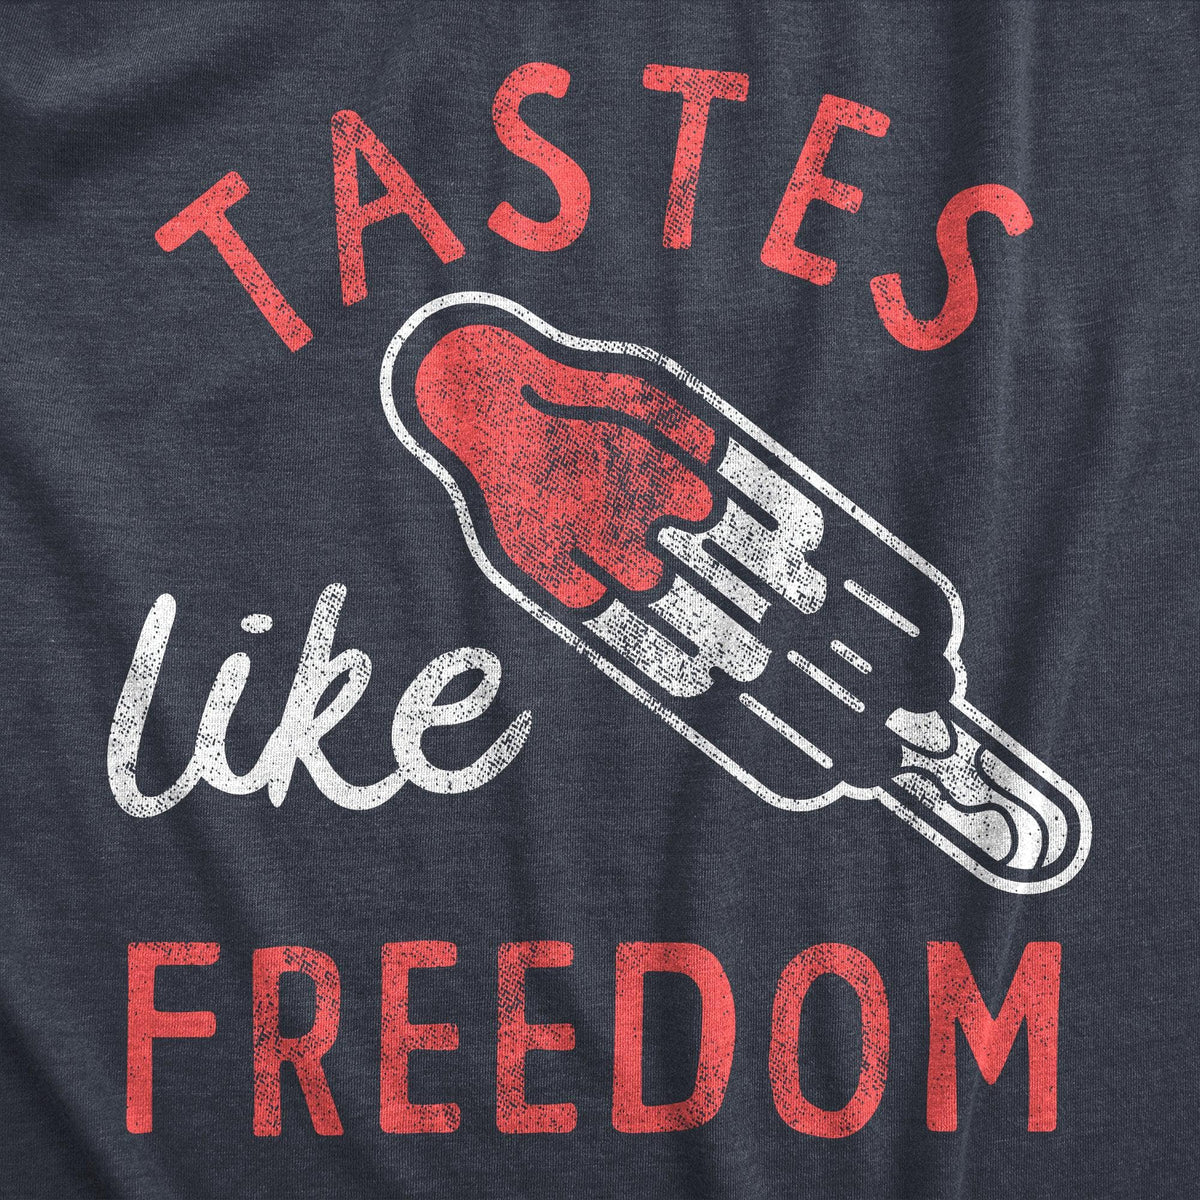 Tastes Like Freedom Men&#39;s Tshirt  -  Crazy Dog T-Shirts